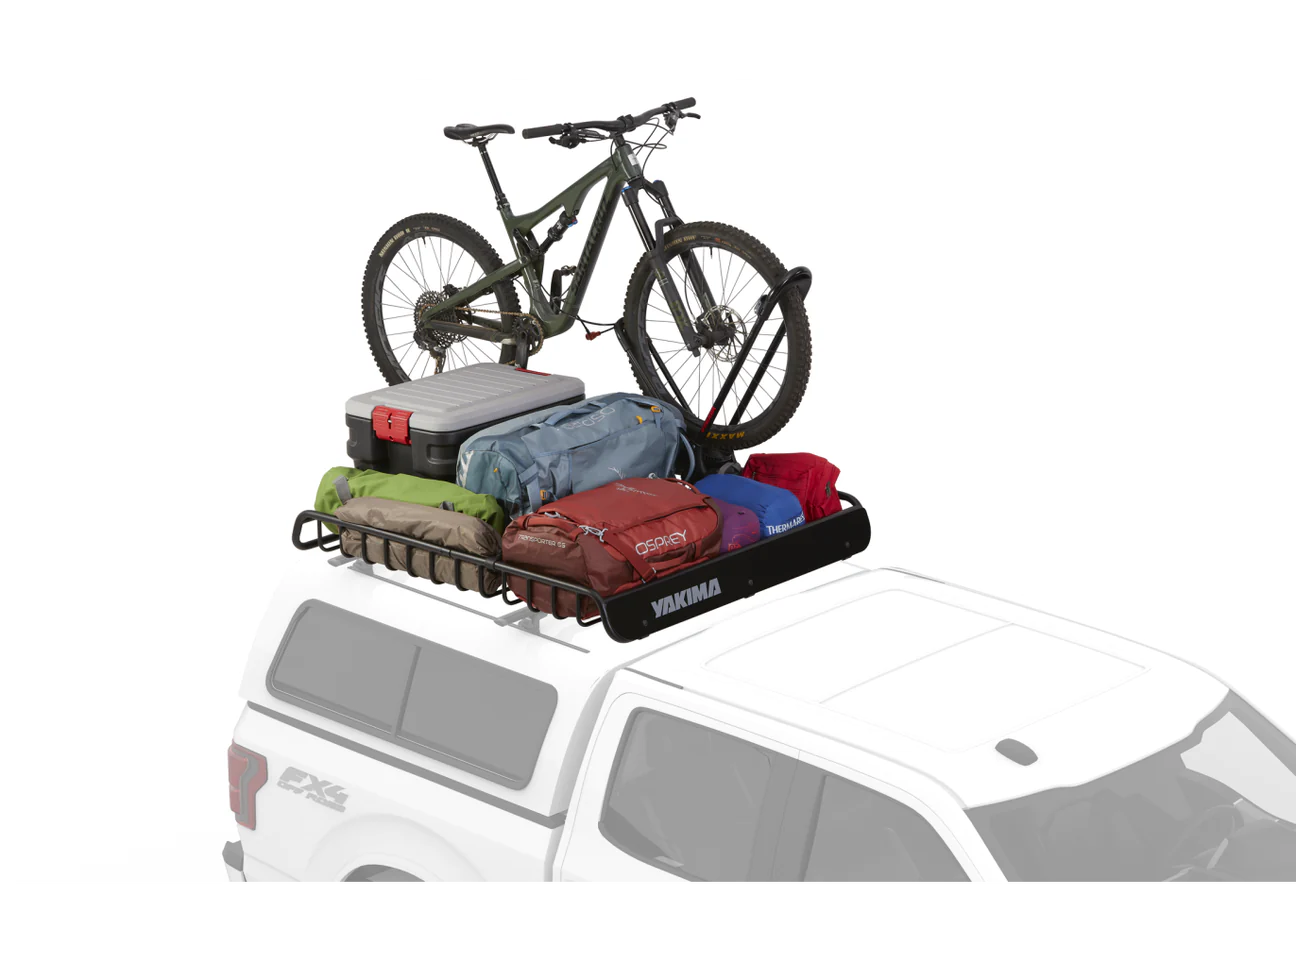 A Yakima Mega Warrior bike rack on top of a vehicle.